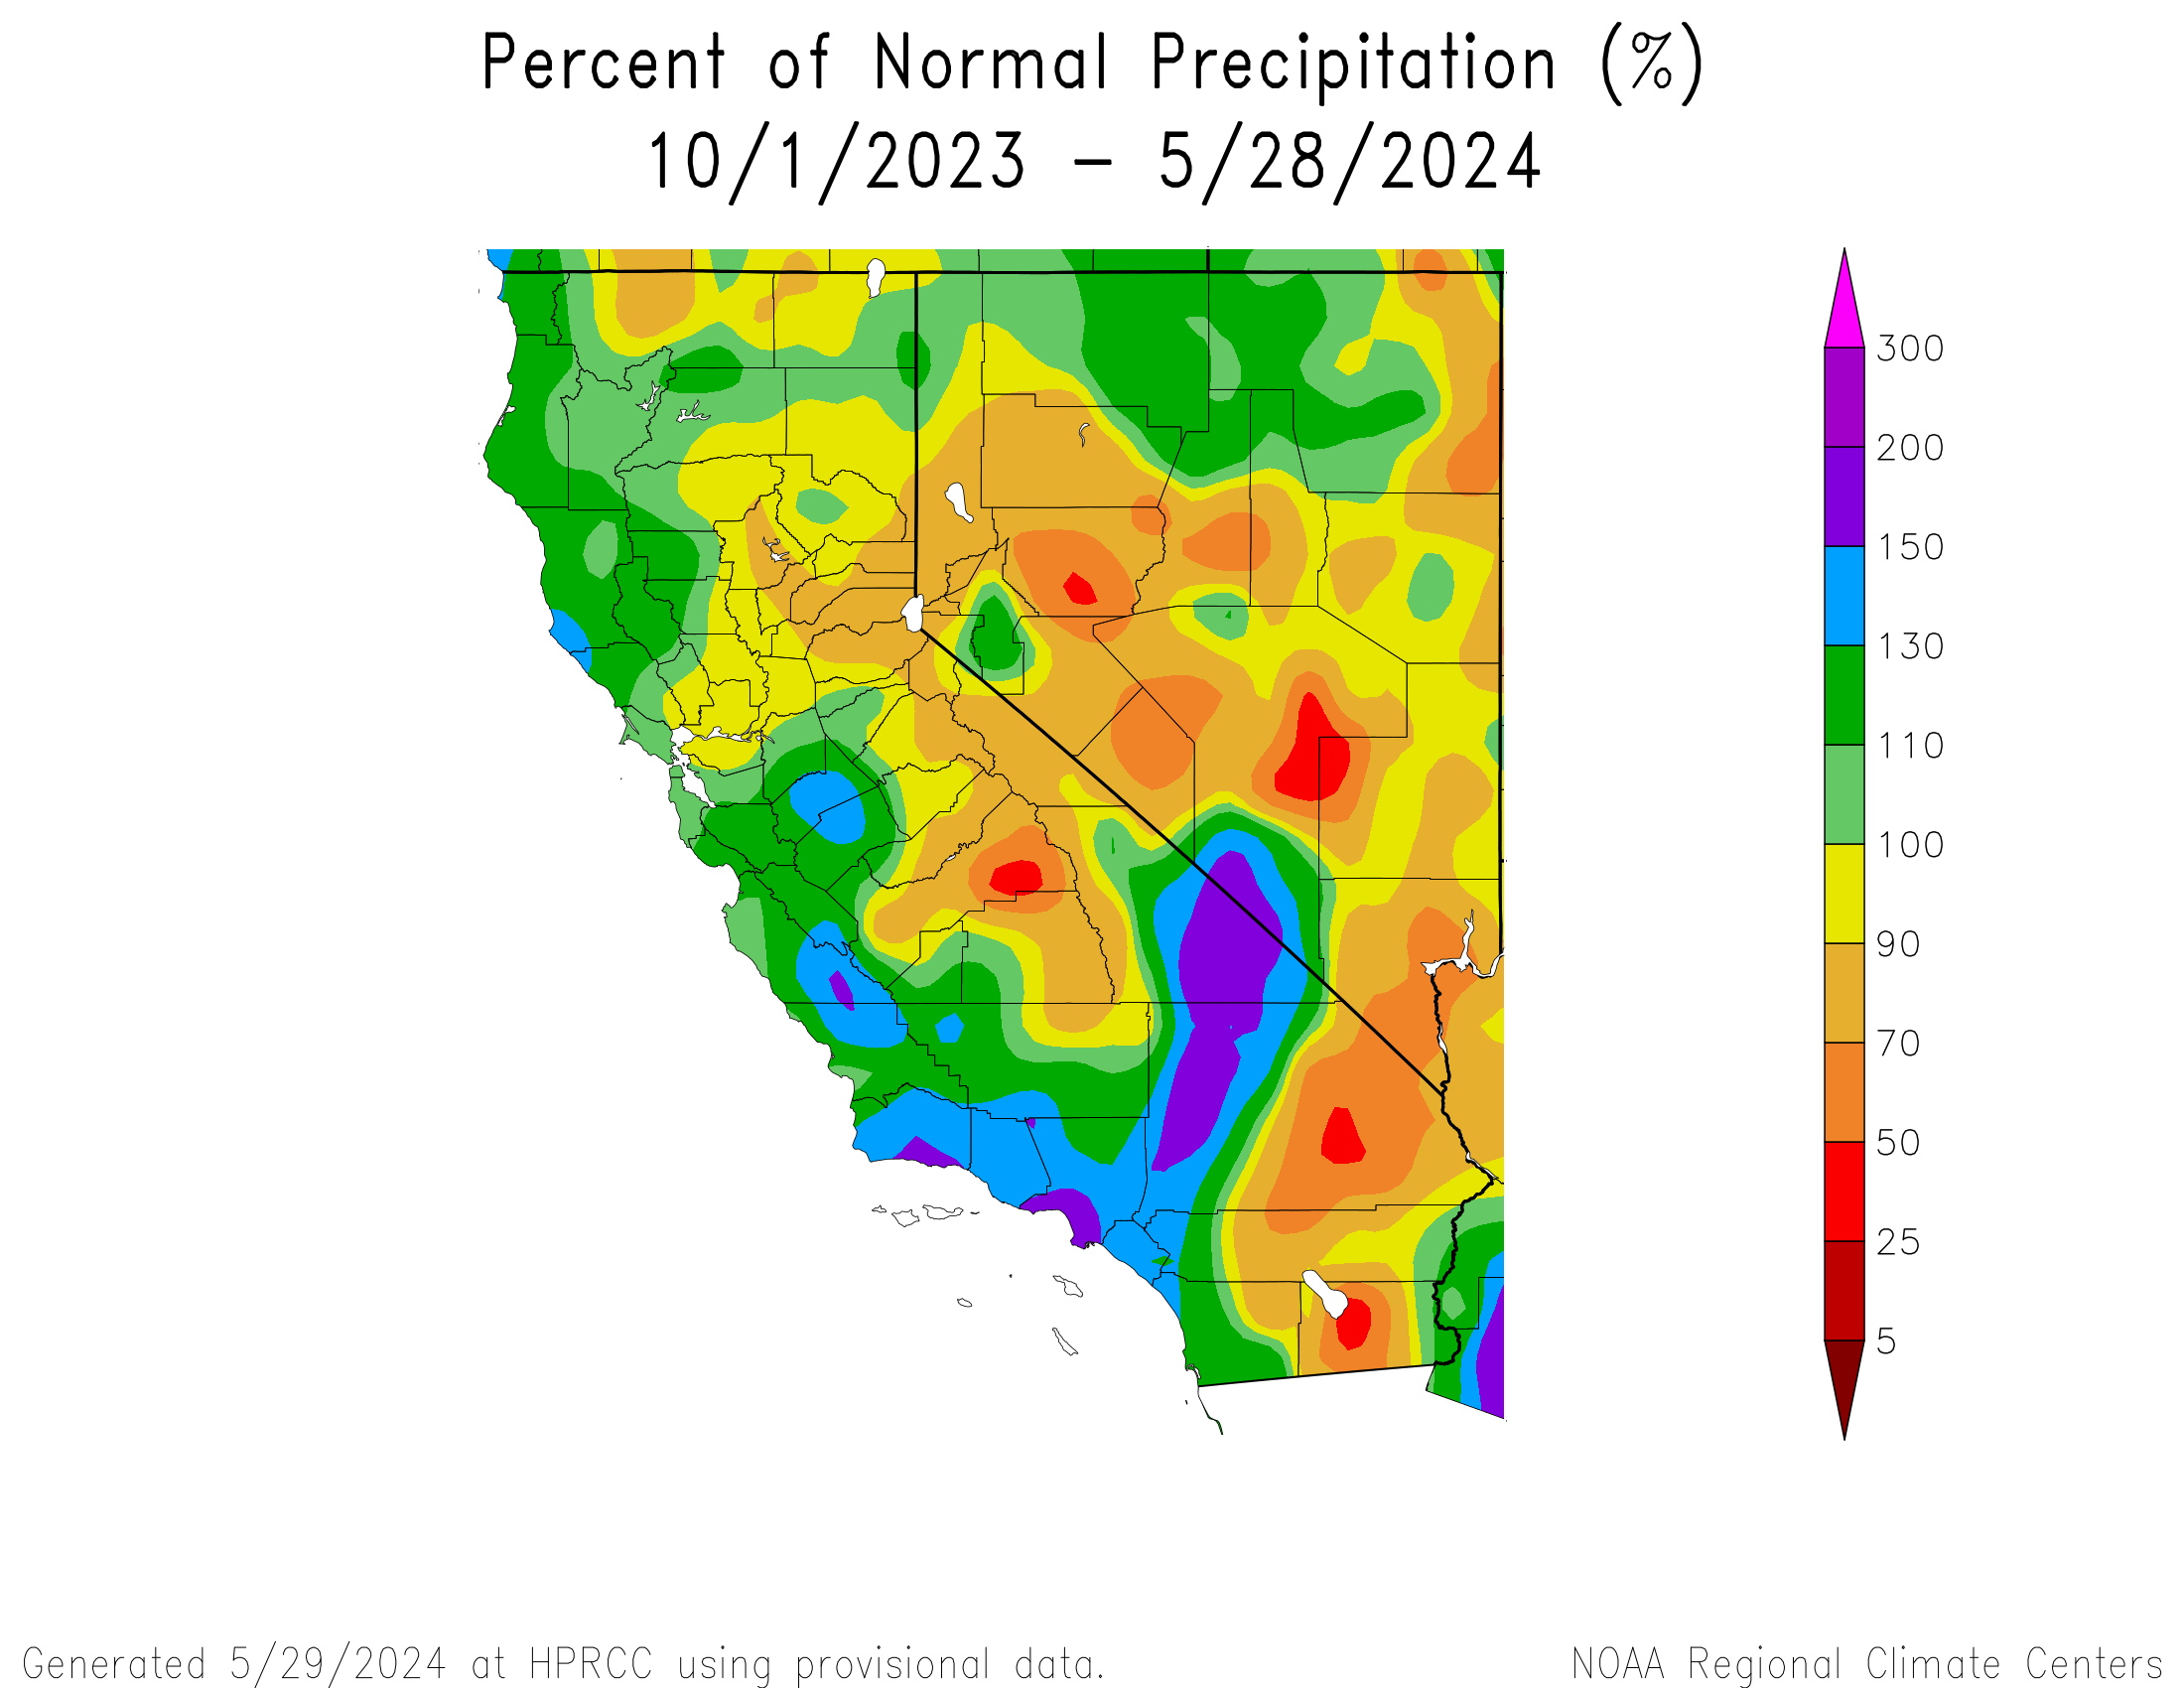 Percent of Normal Precipitation for California